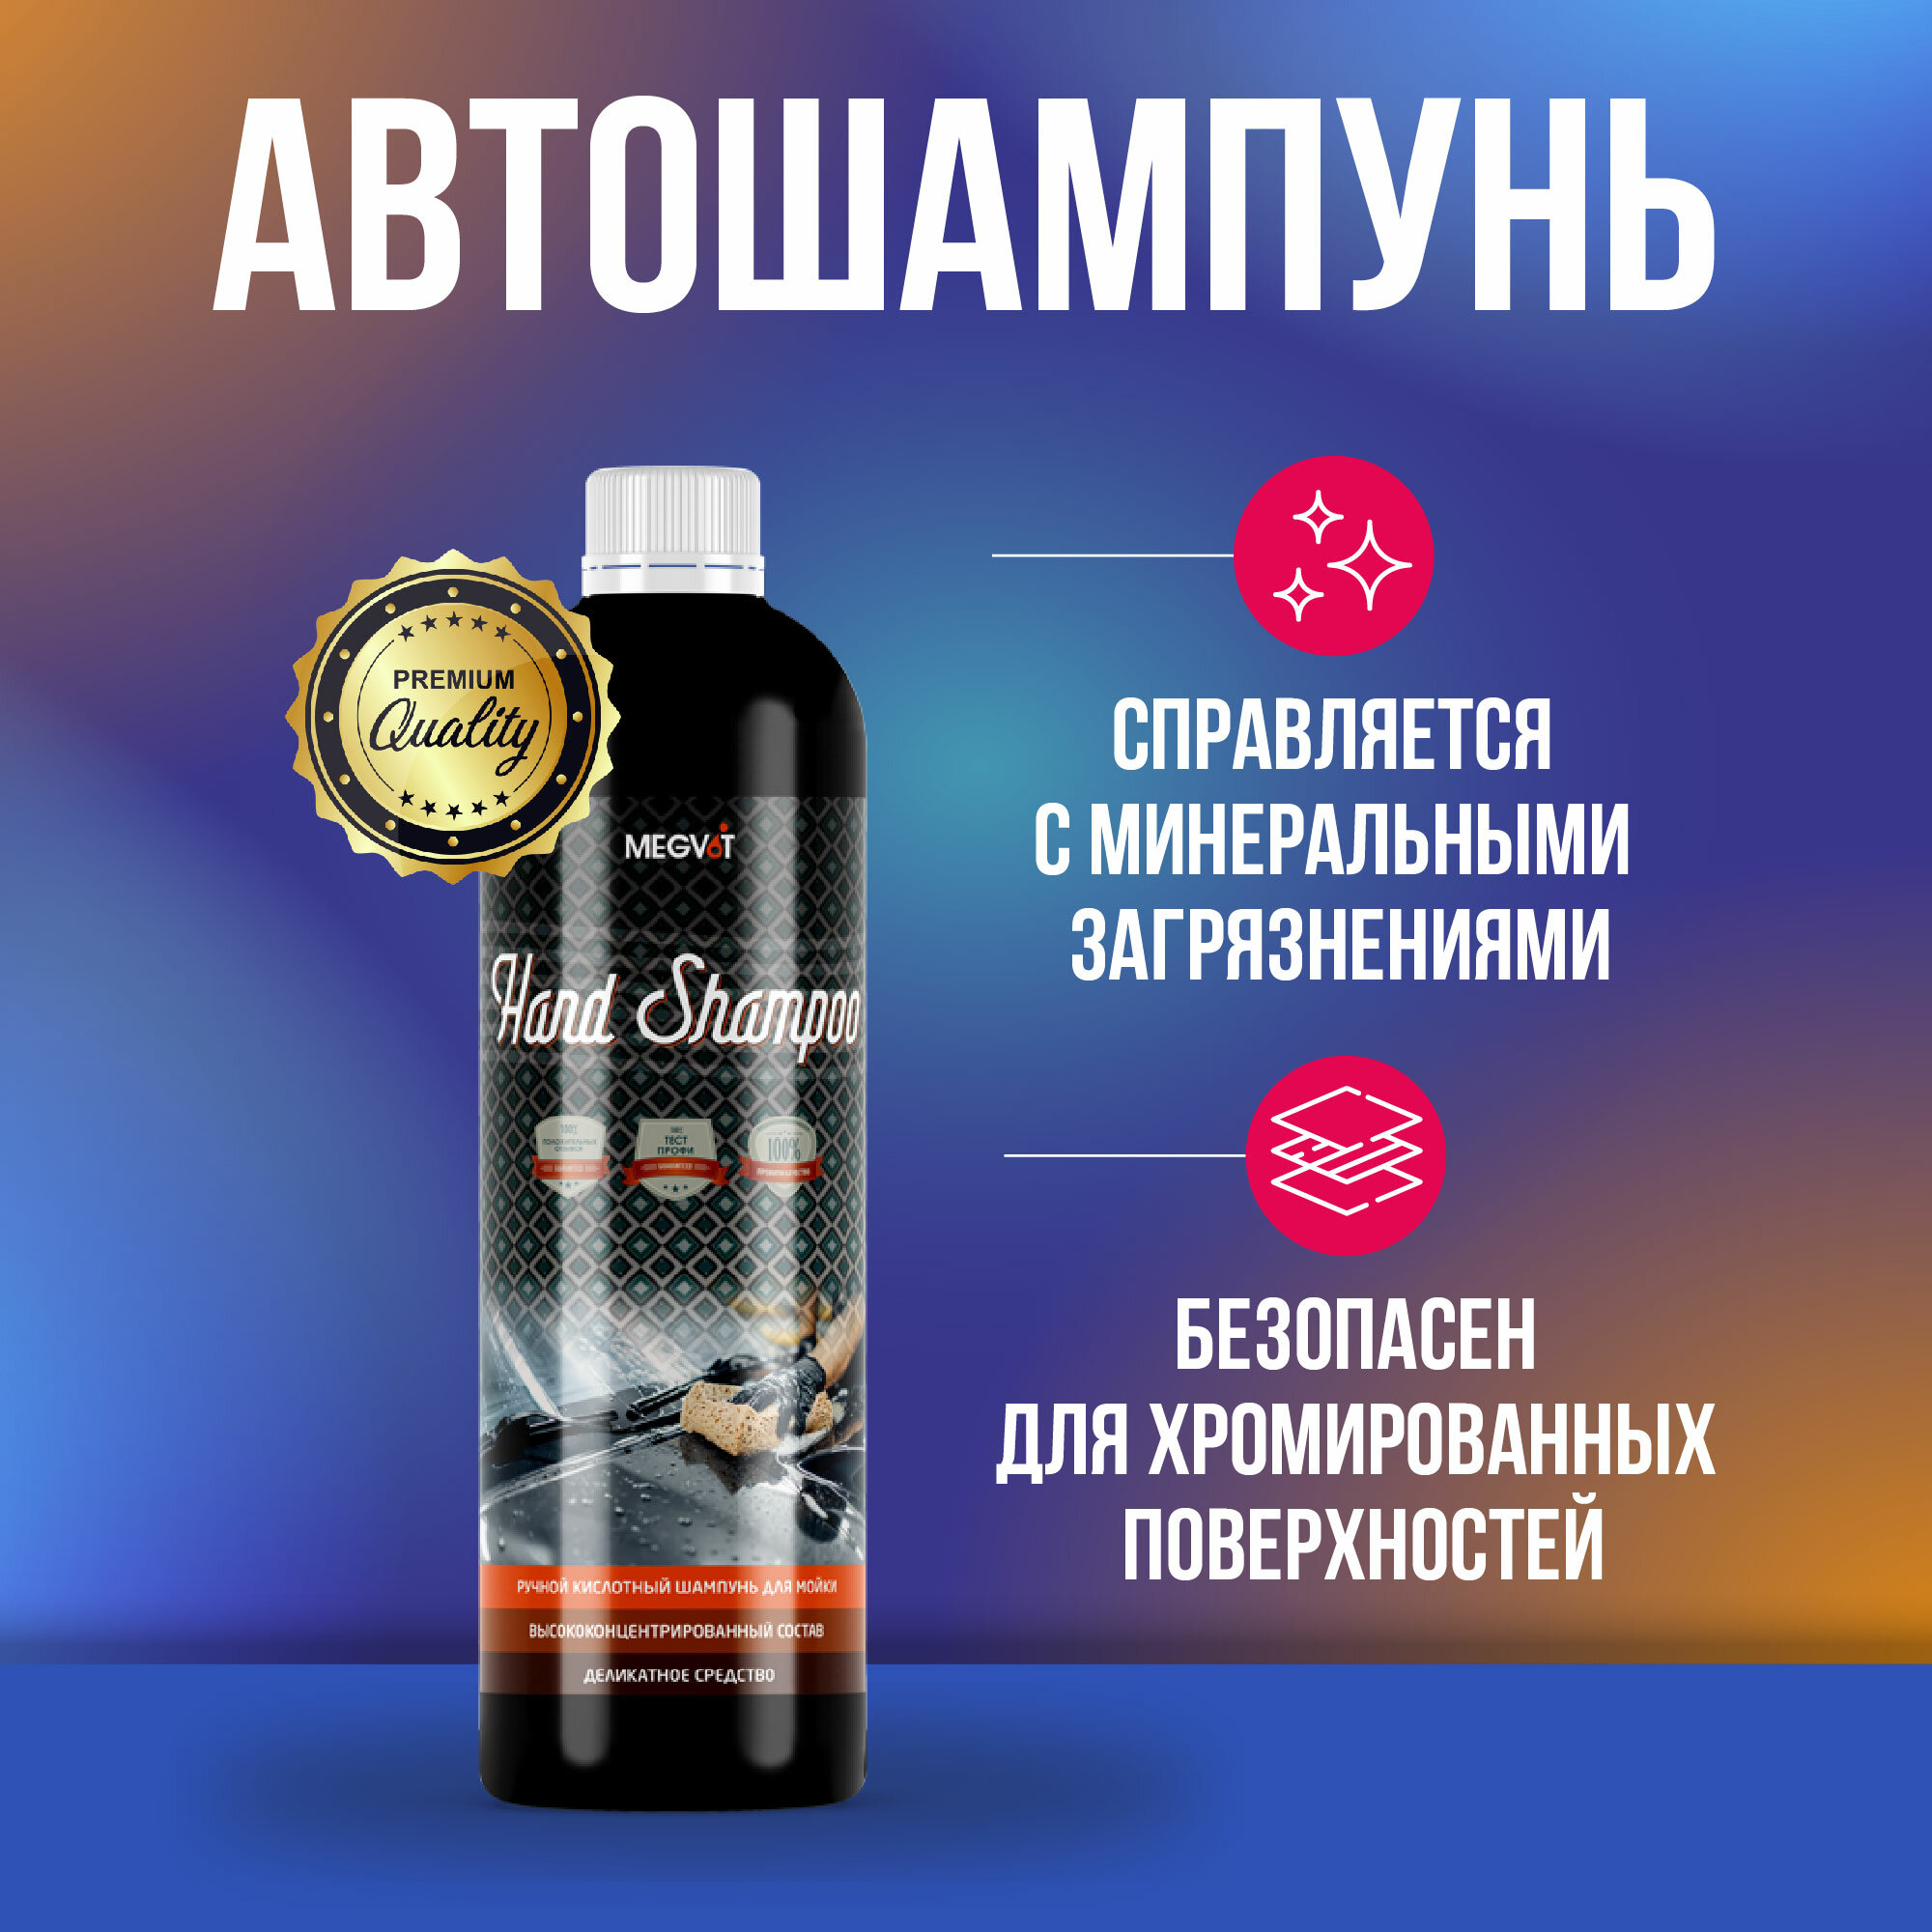 Megvit Hand Shampoo автошампунь 500 мл